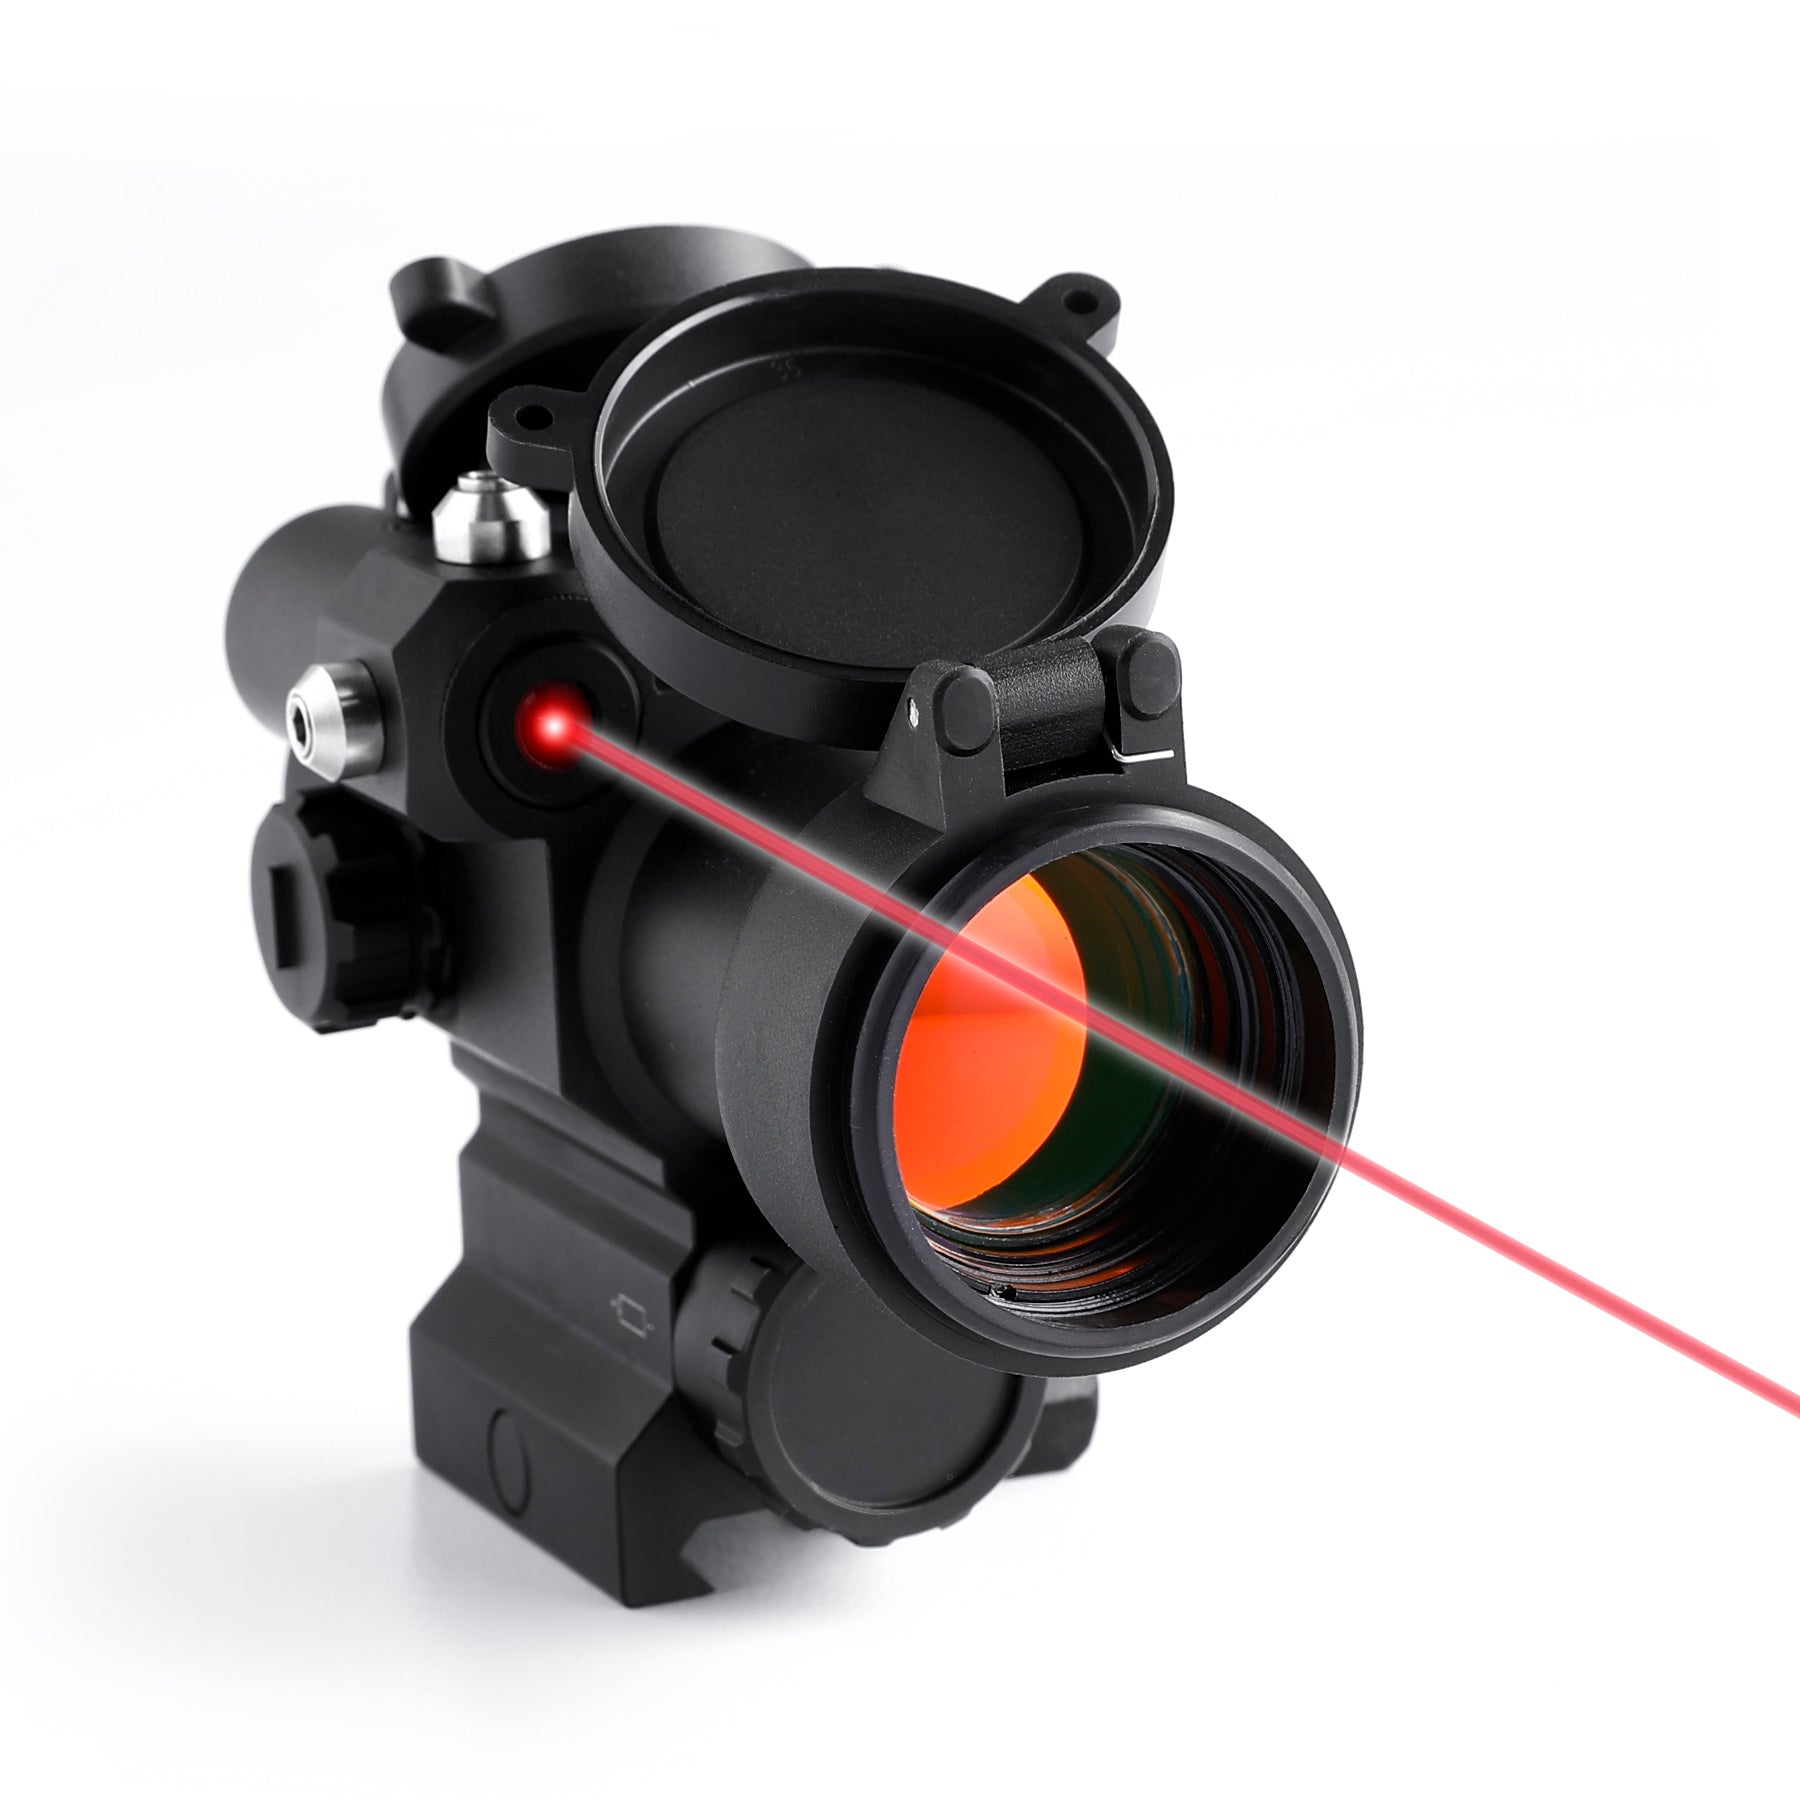 Built-In Visible Red Laser